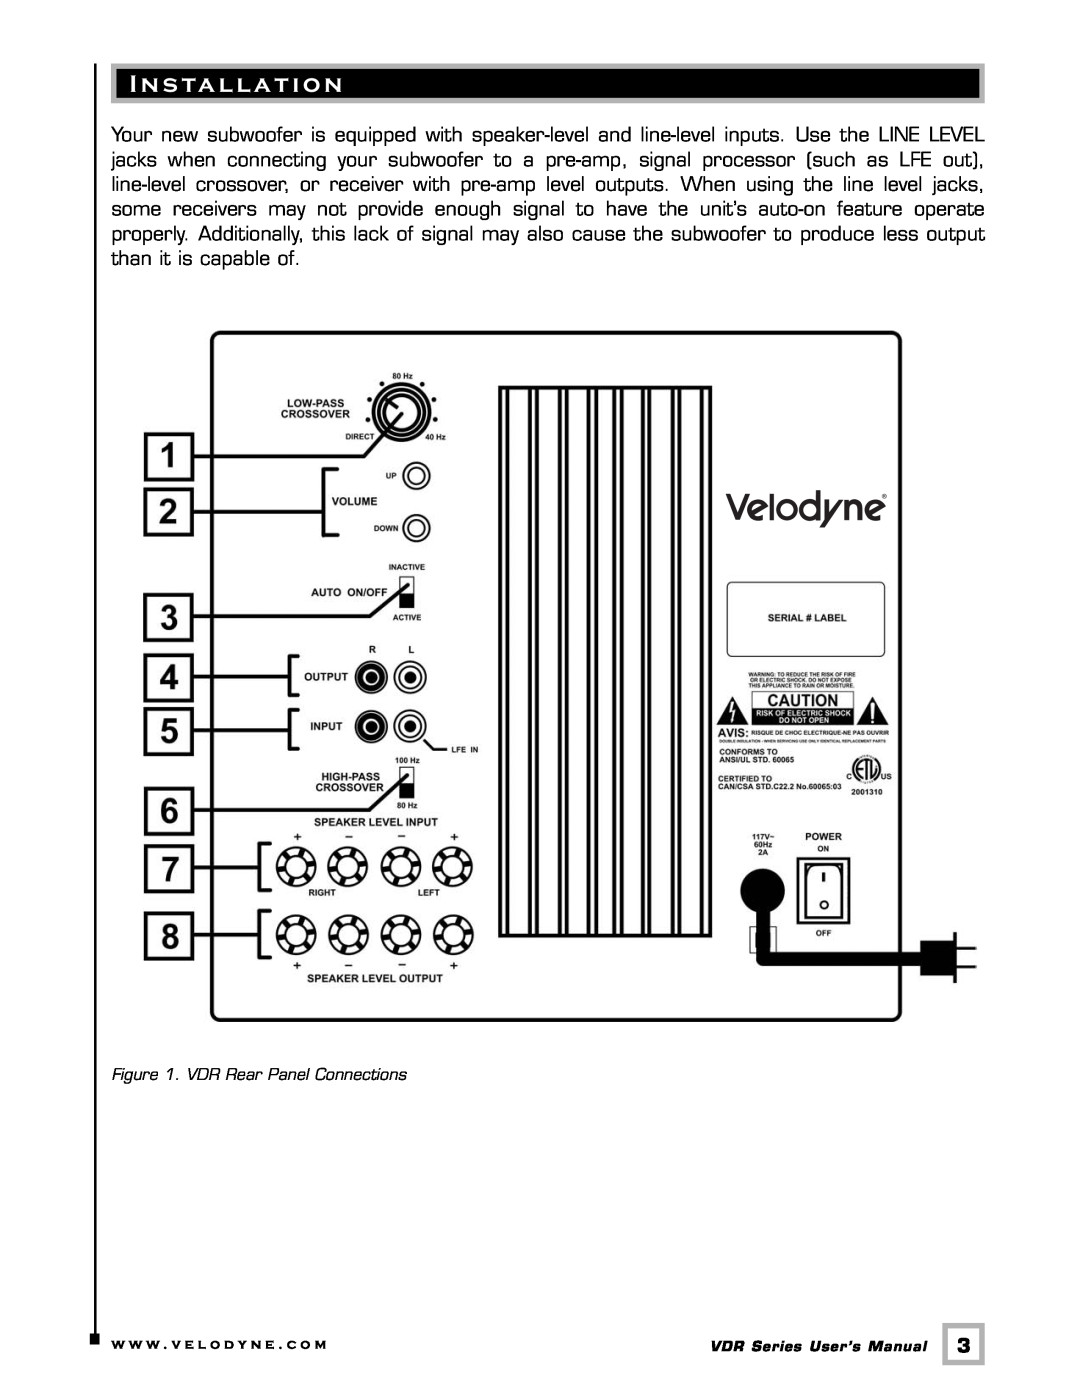 Velodyne Acoustics VDR-12, VDR-10 user manual I n s ta l l a t i o n, VDR Rear Panel Connections 